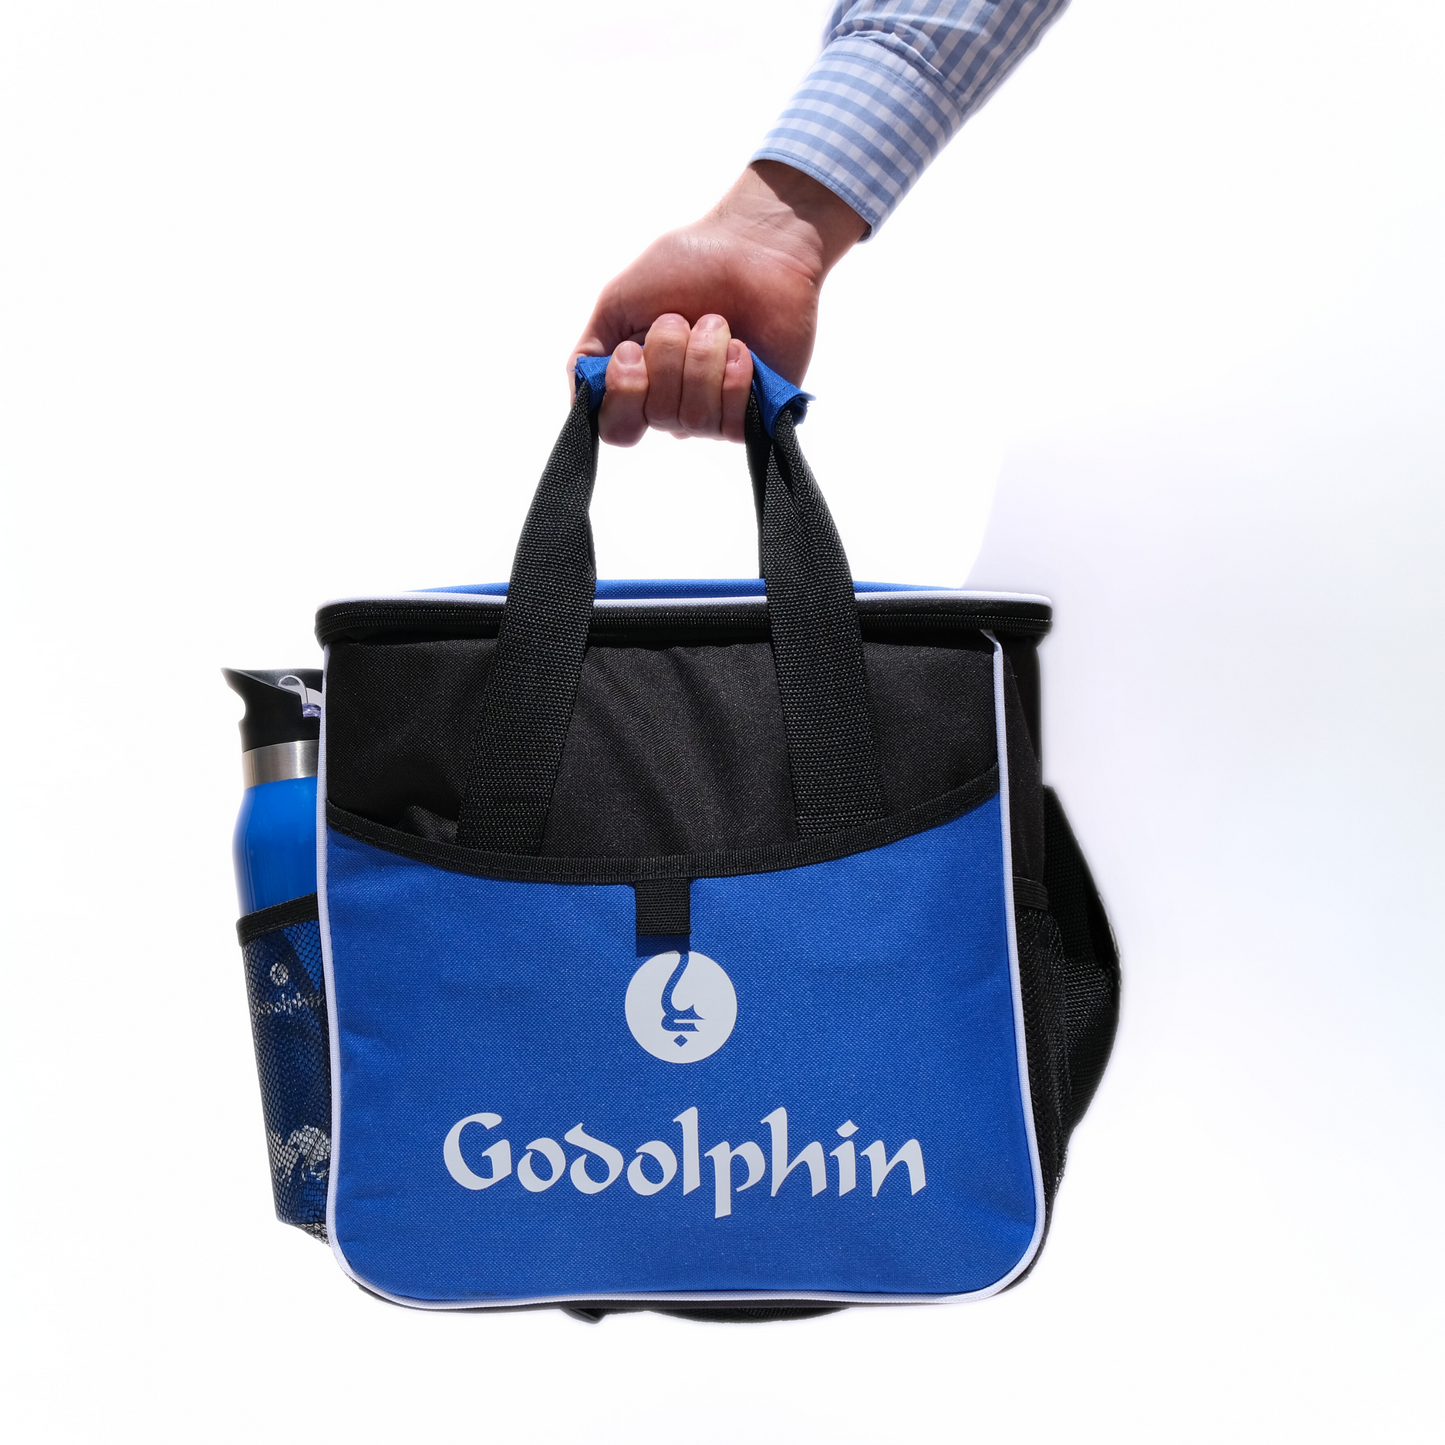 Godolphin Cooler Bag